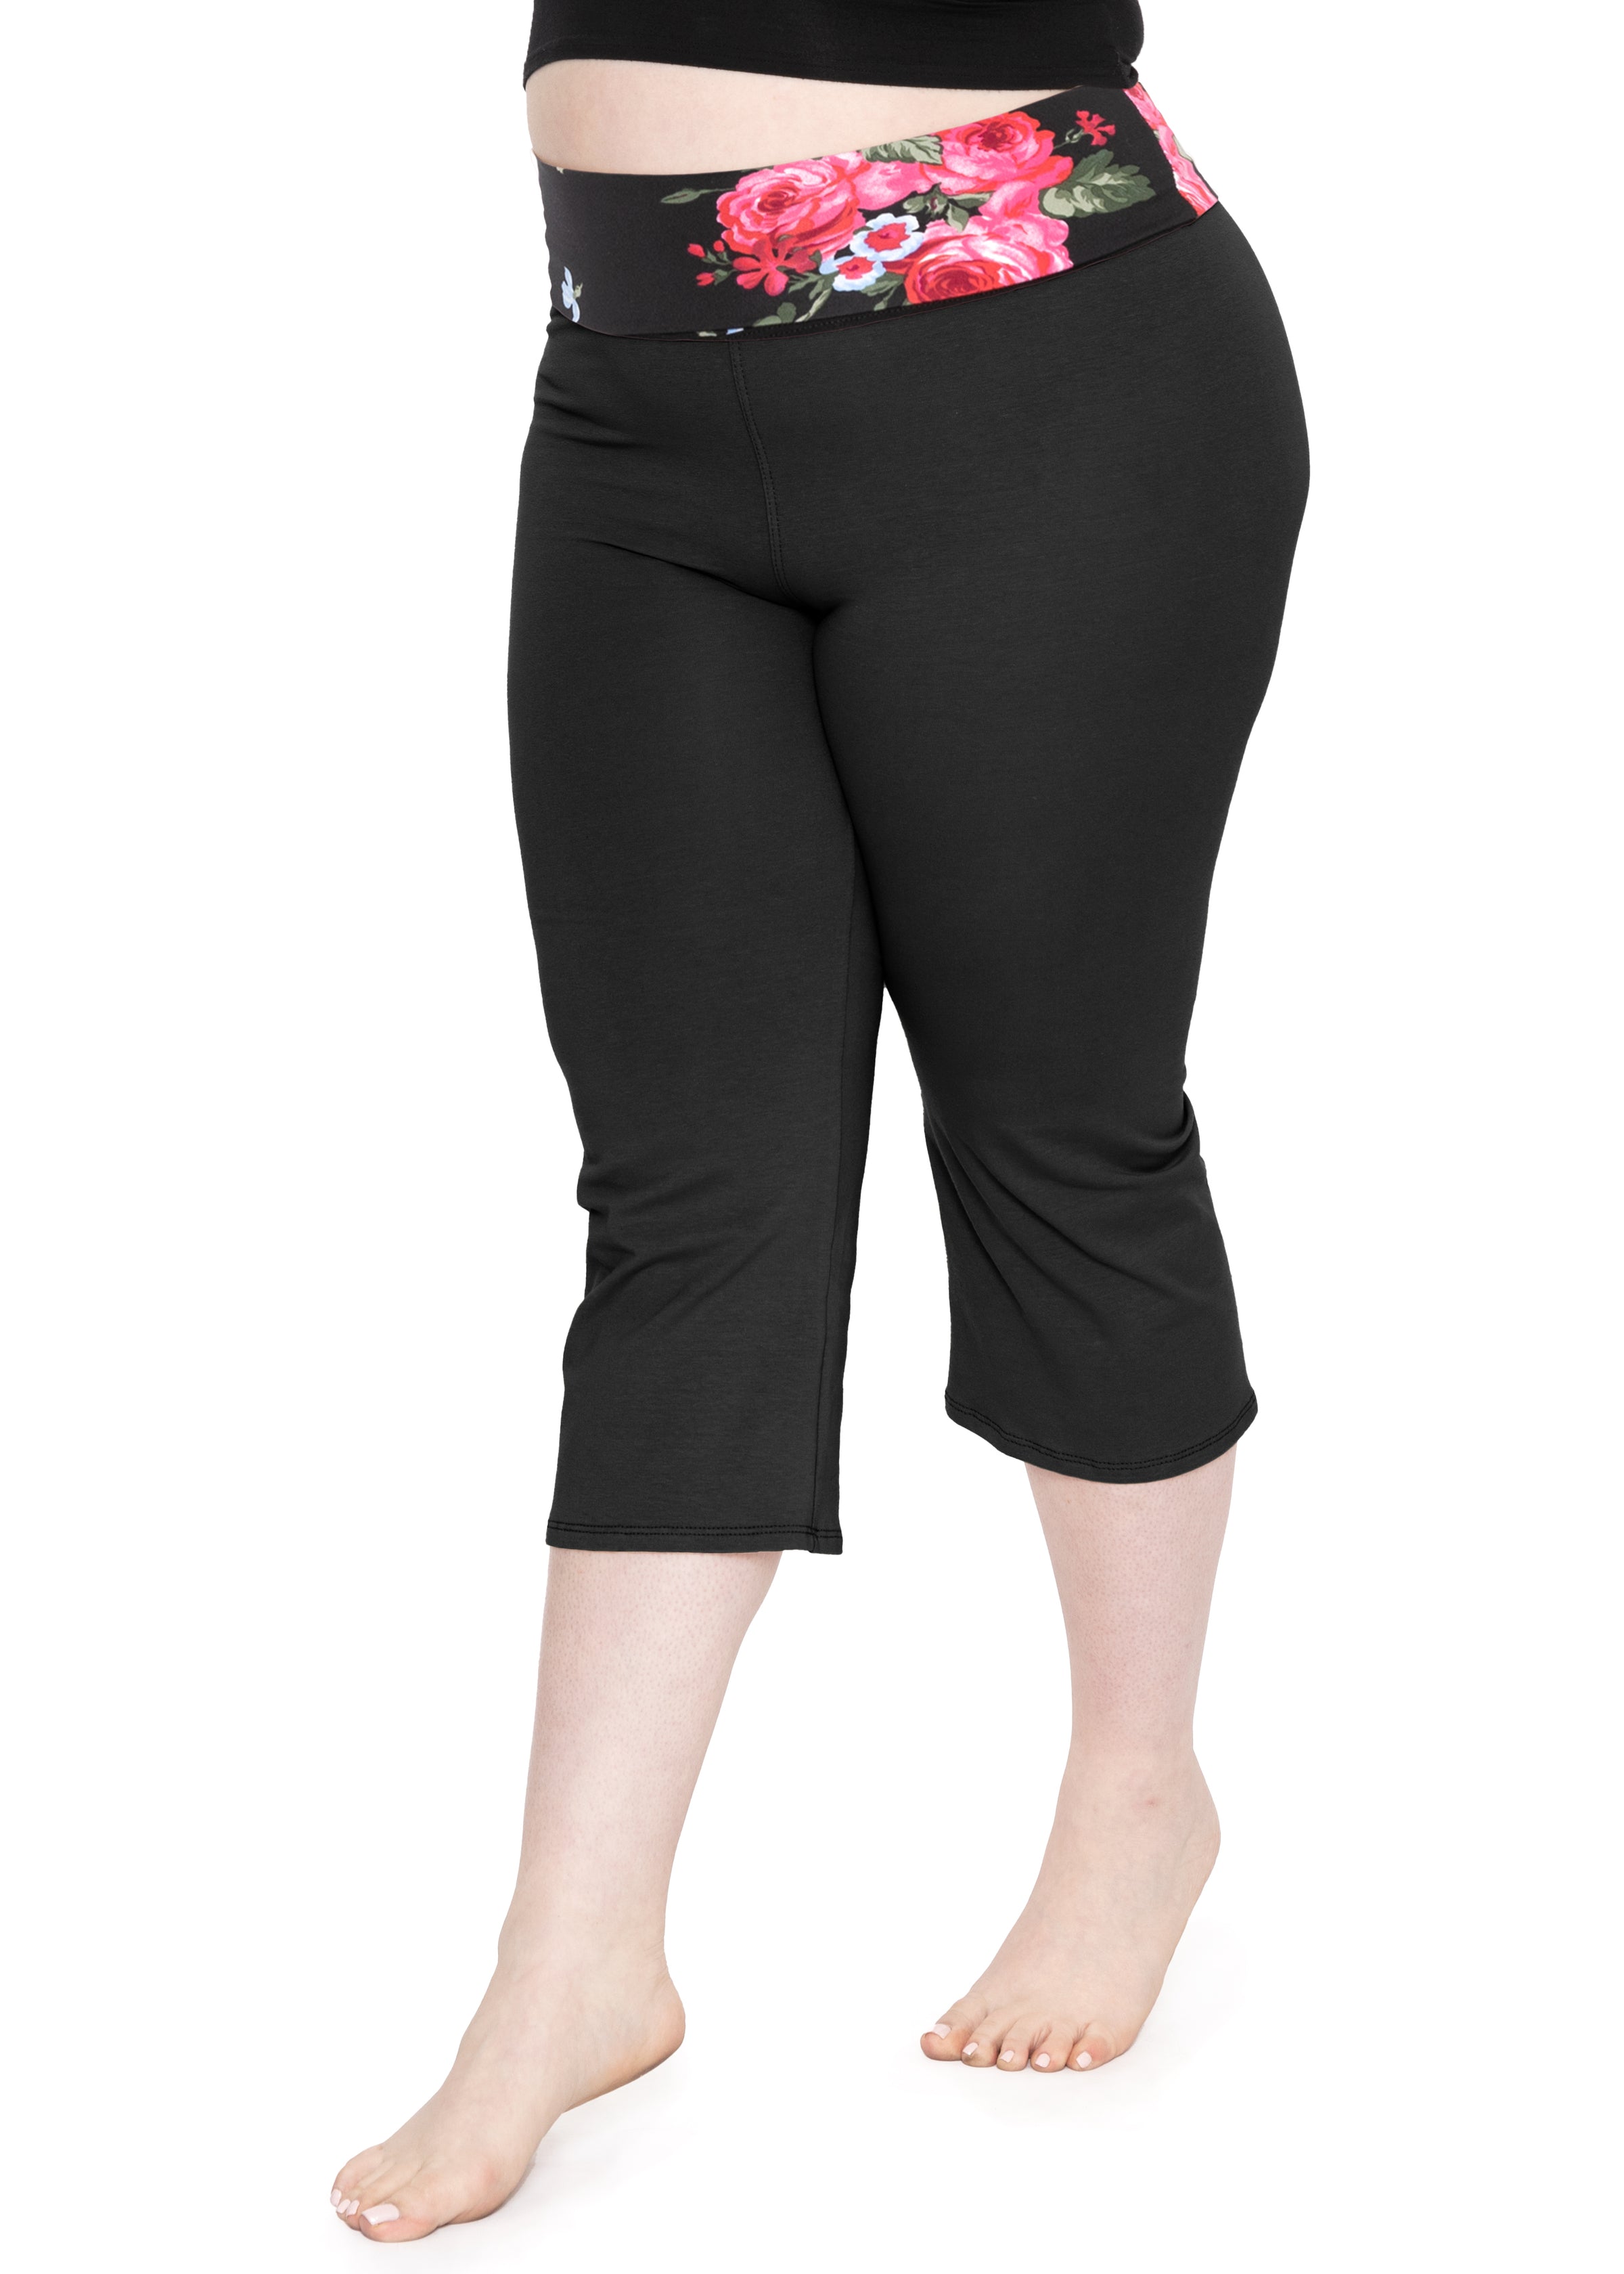 AopnHQ Flowing Pants Women Relaxed fit Capri Yoga Pants Plus Size